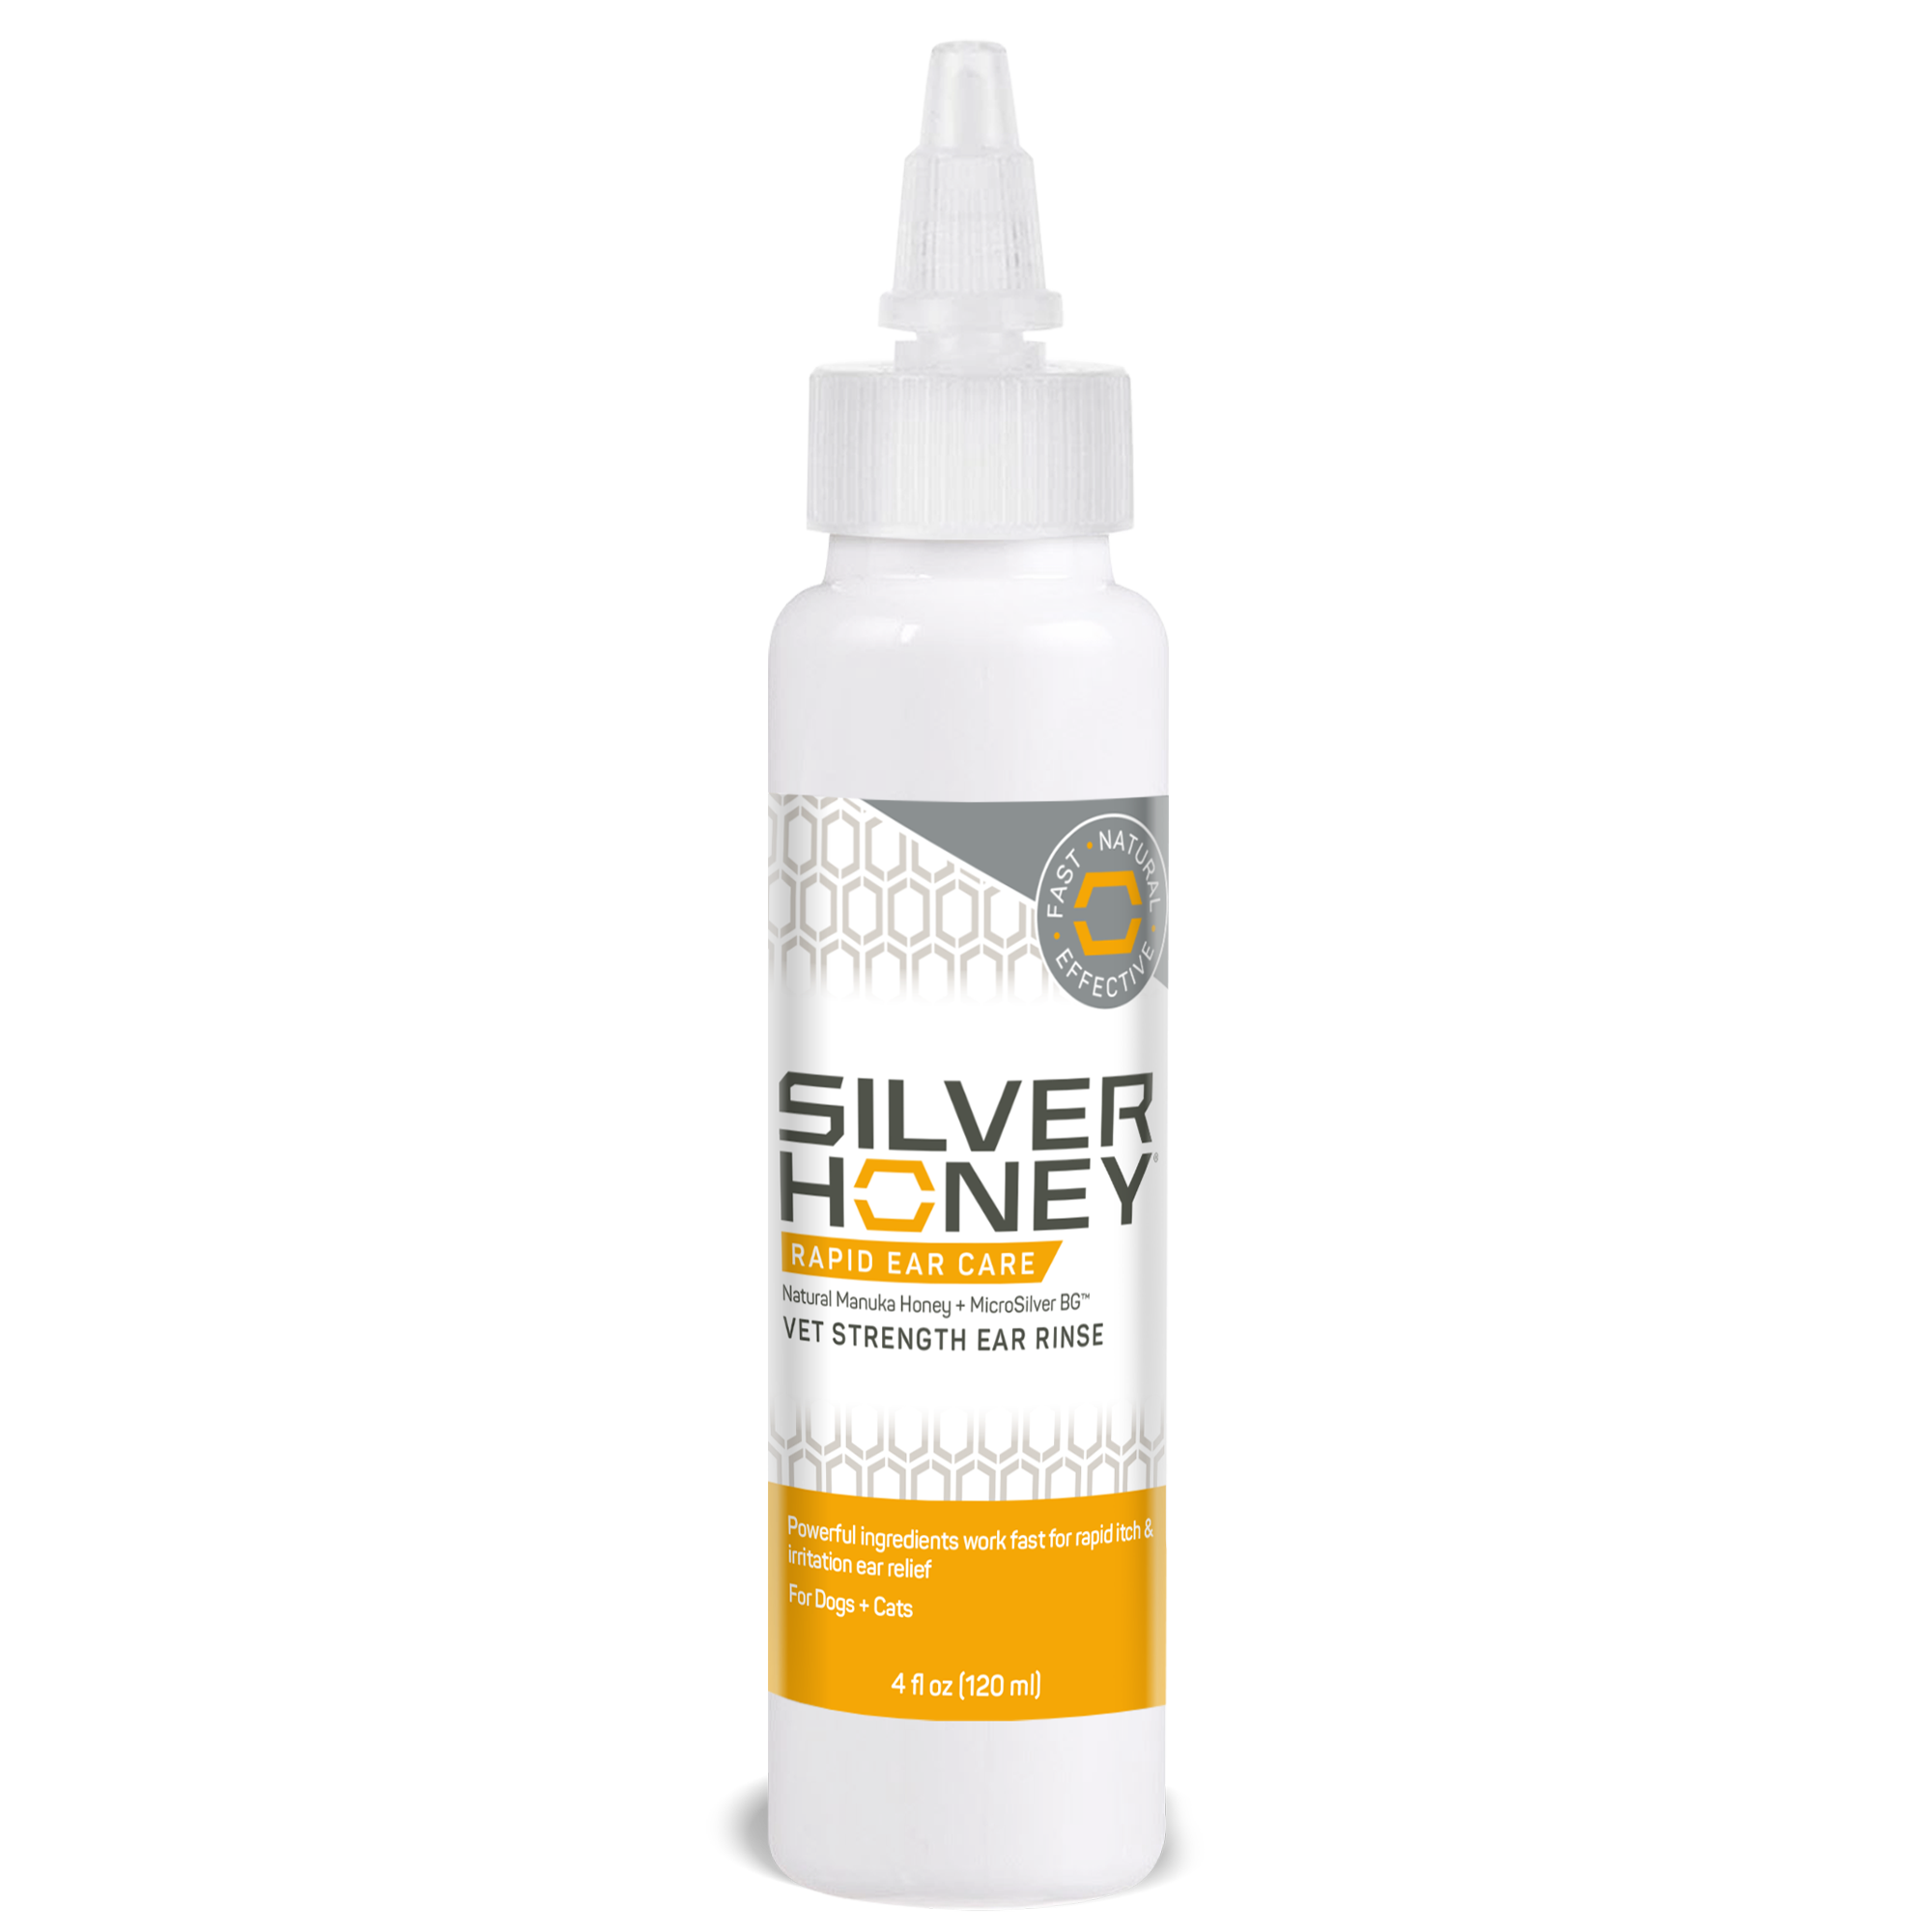 Silver Honey Rapid Ear Care